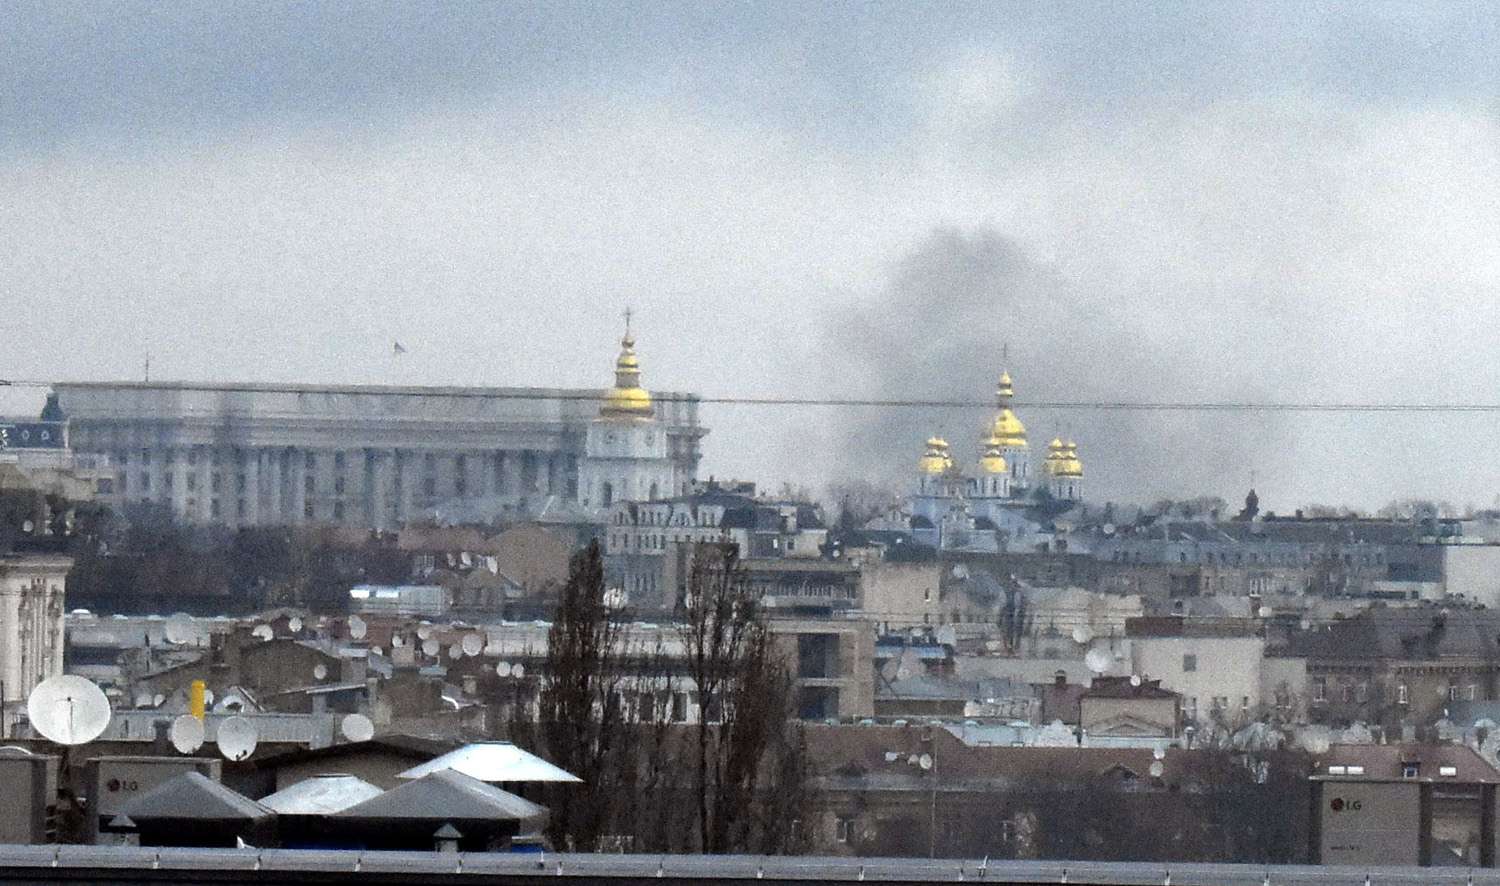 Black smoke shooting up into the air in Ukraine's capital Kyiv